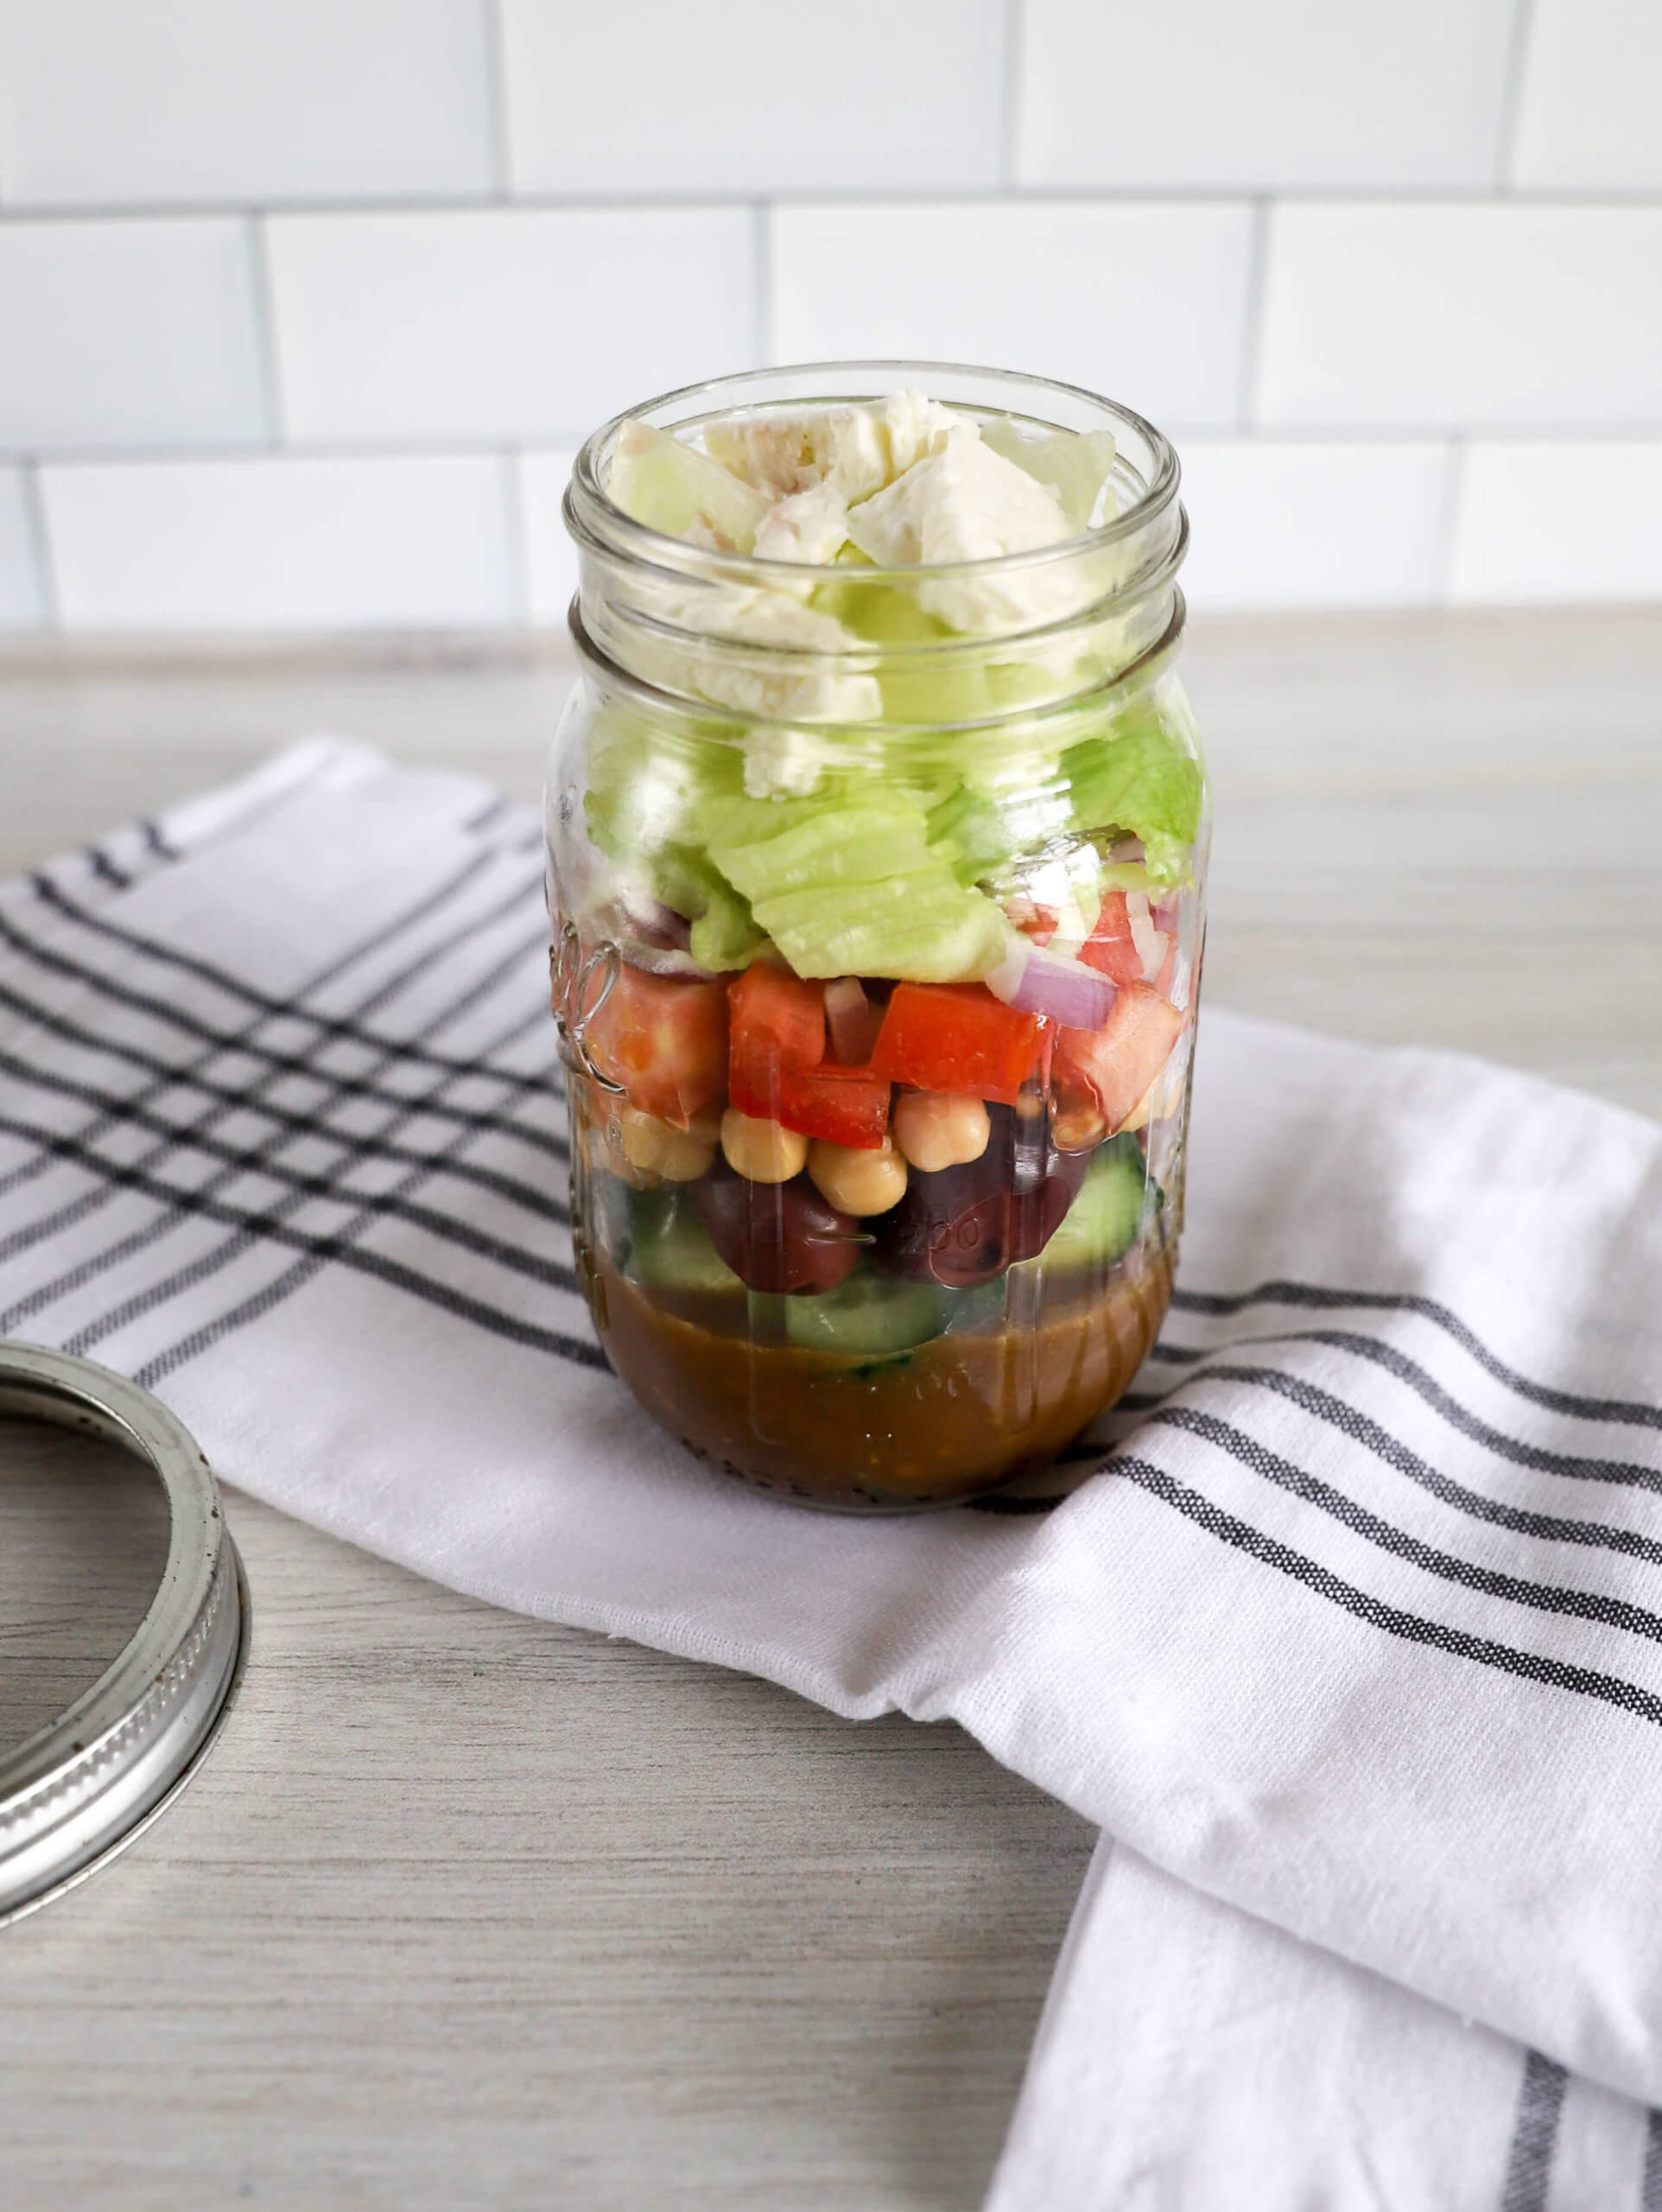 Greek Mason Jar Salad